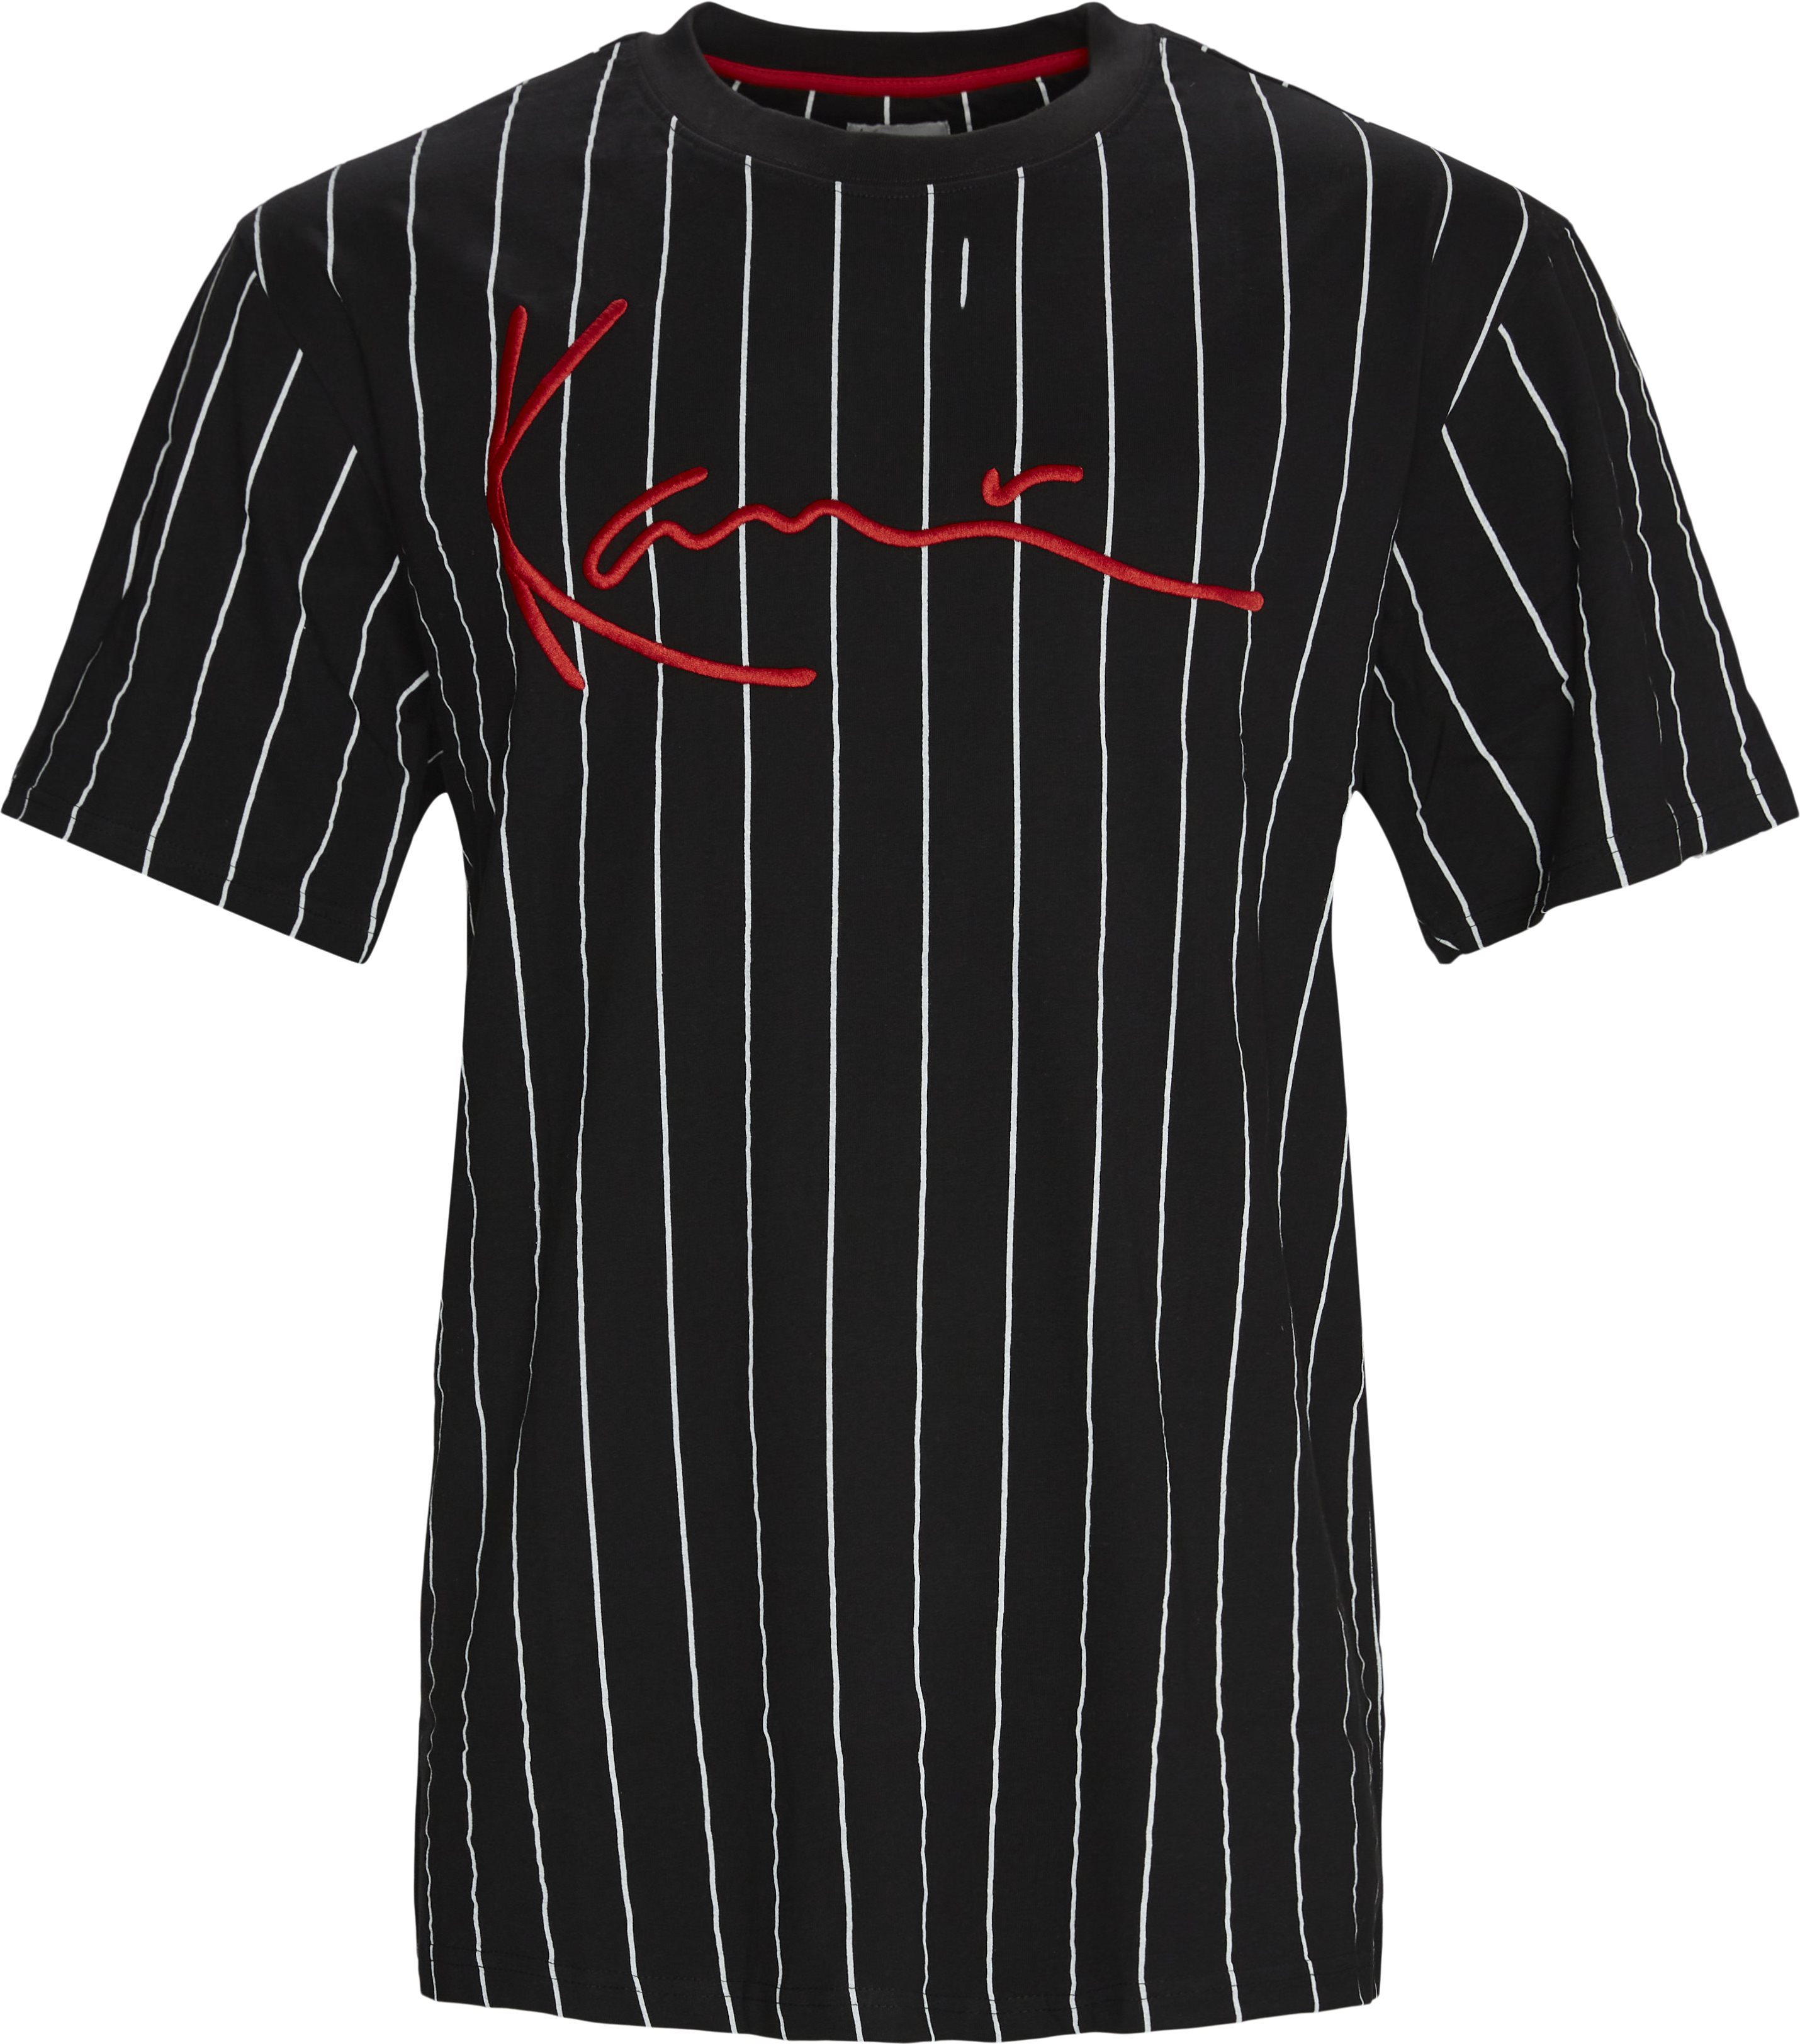 Signature Pinstripe Tee - T-shirts - Regular fit - Svart